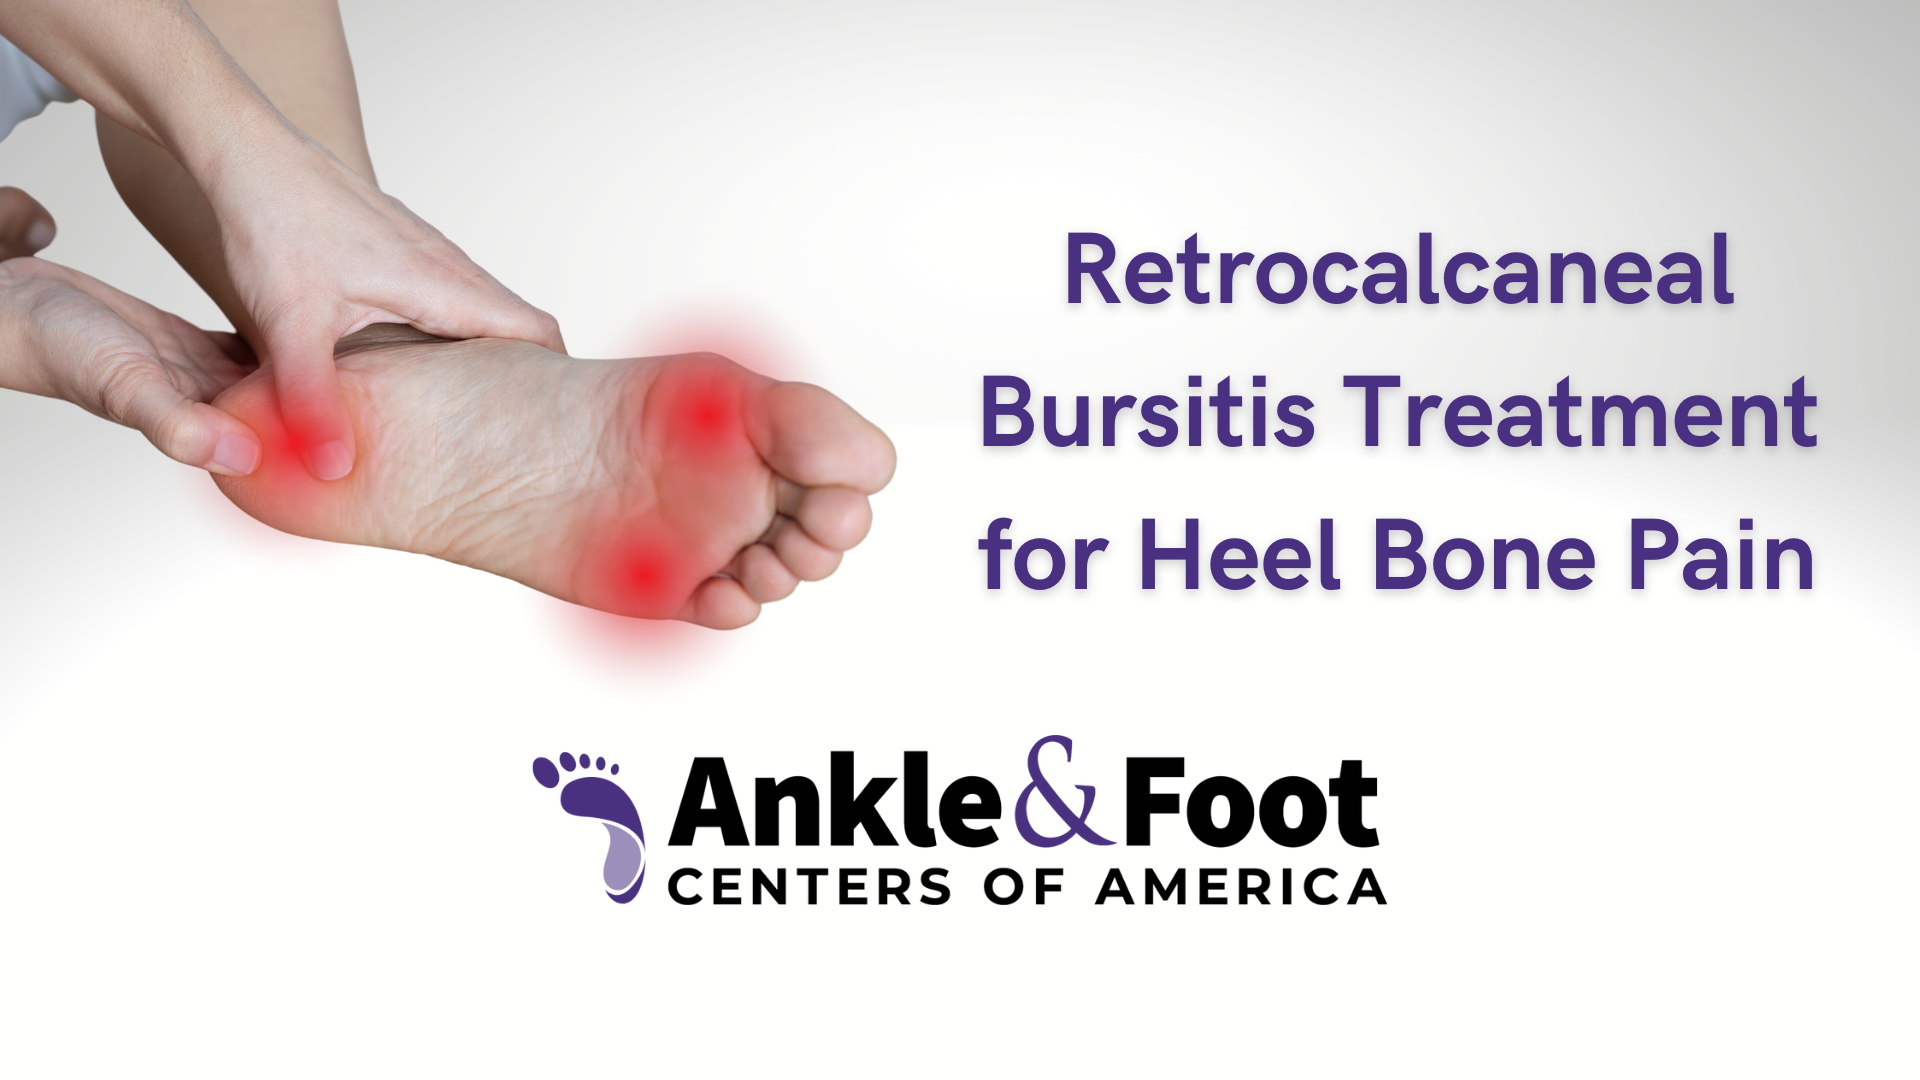 Retrocalcaneal Bursitis Treatment for Heel Bone Pain